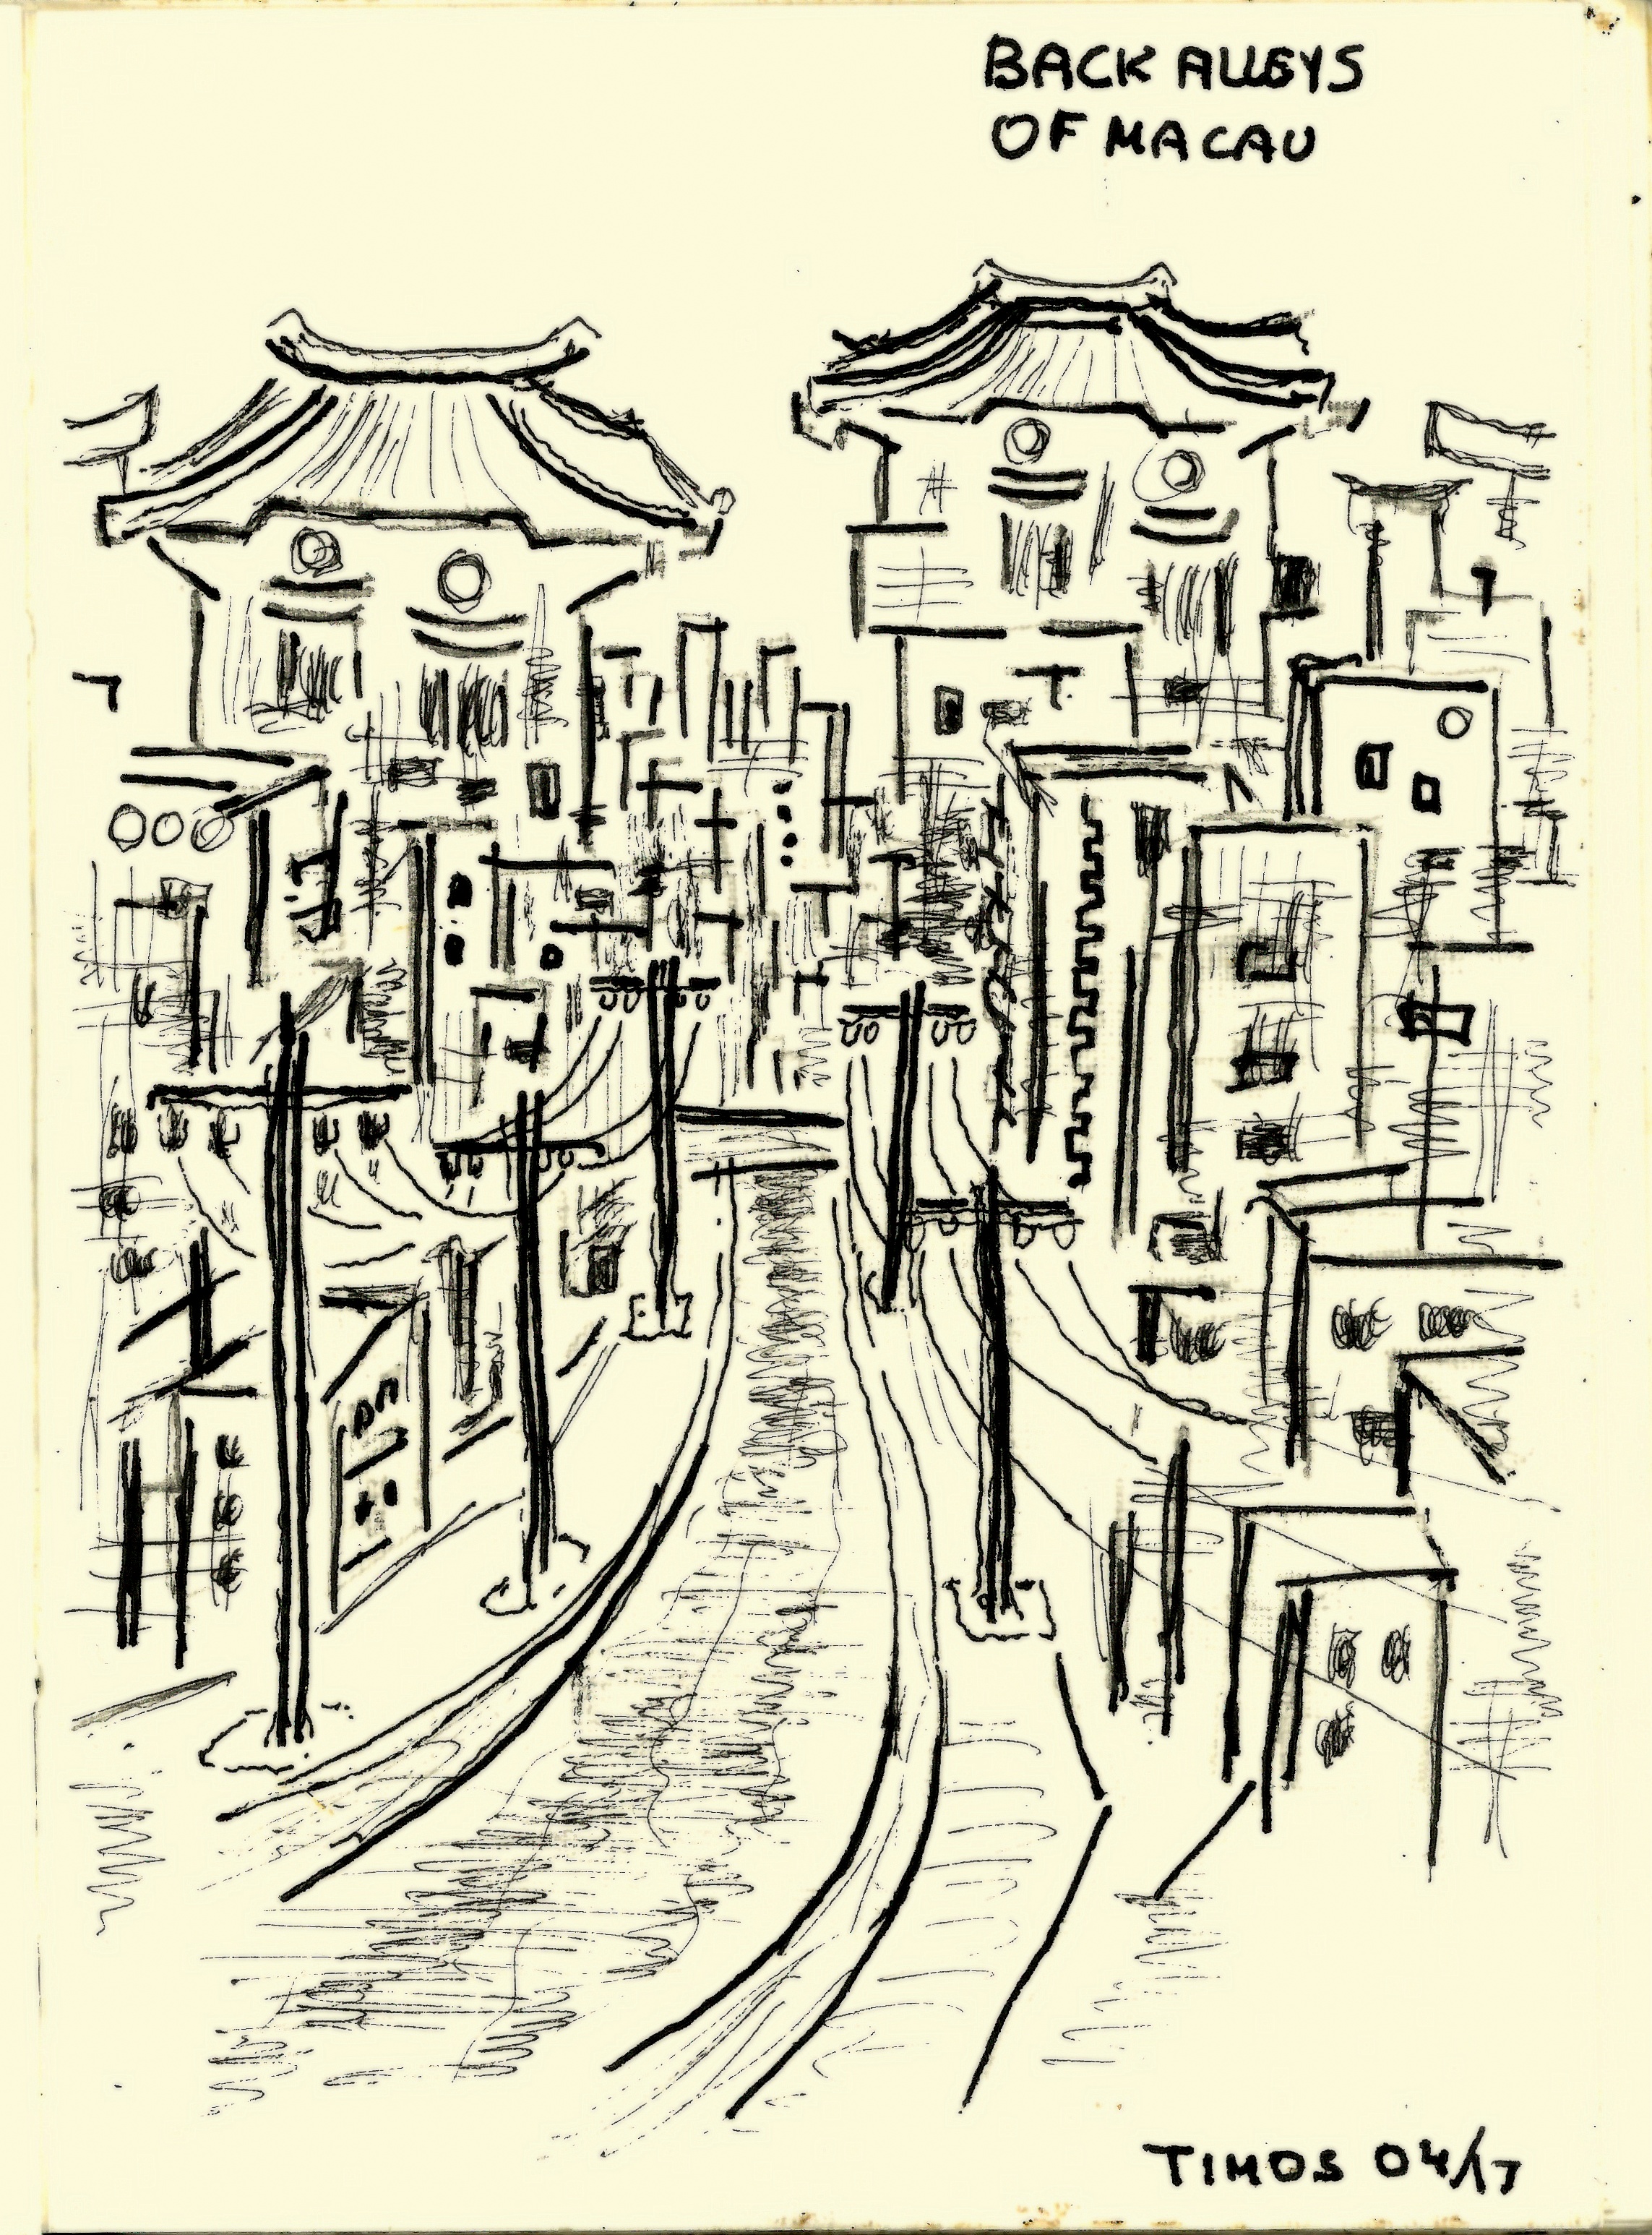 Macau back alleys